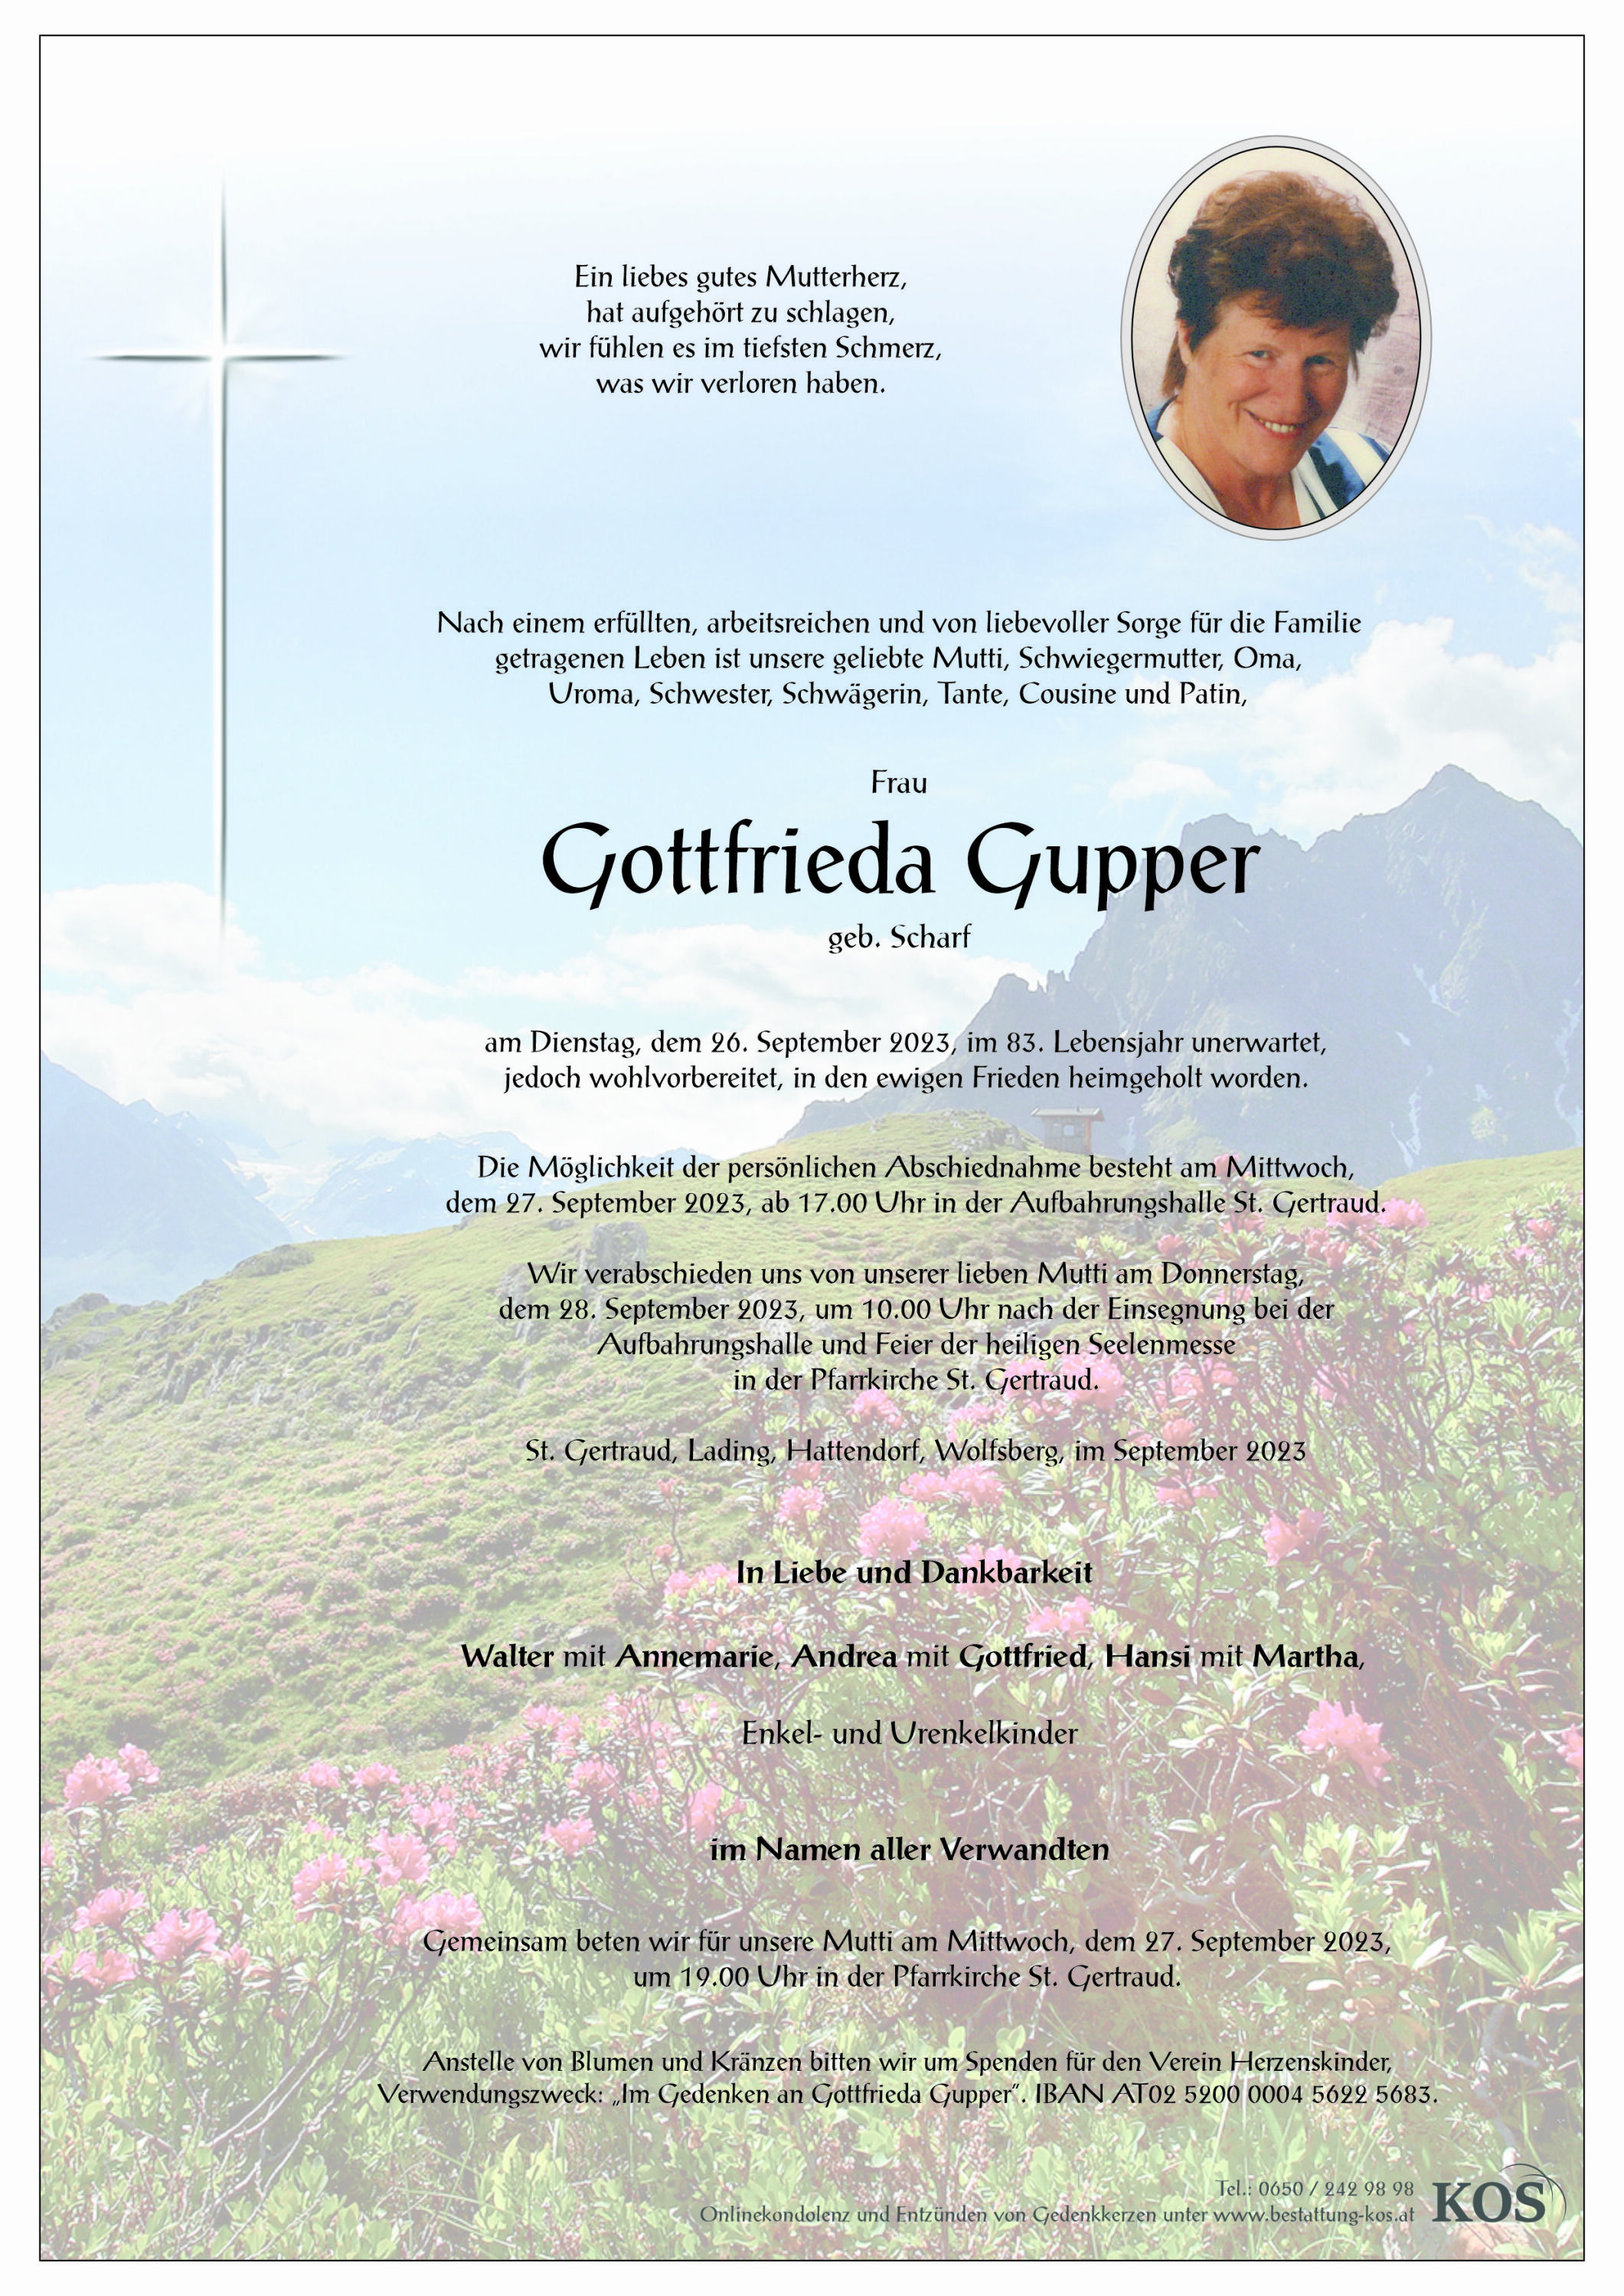 Gottfrieda Gupper